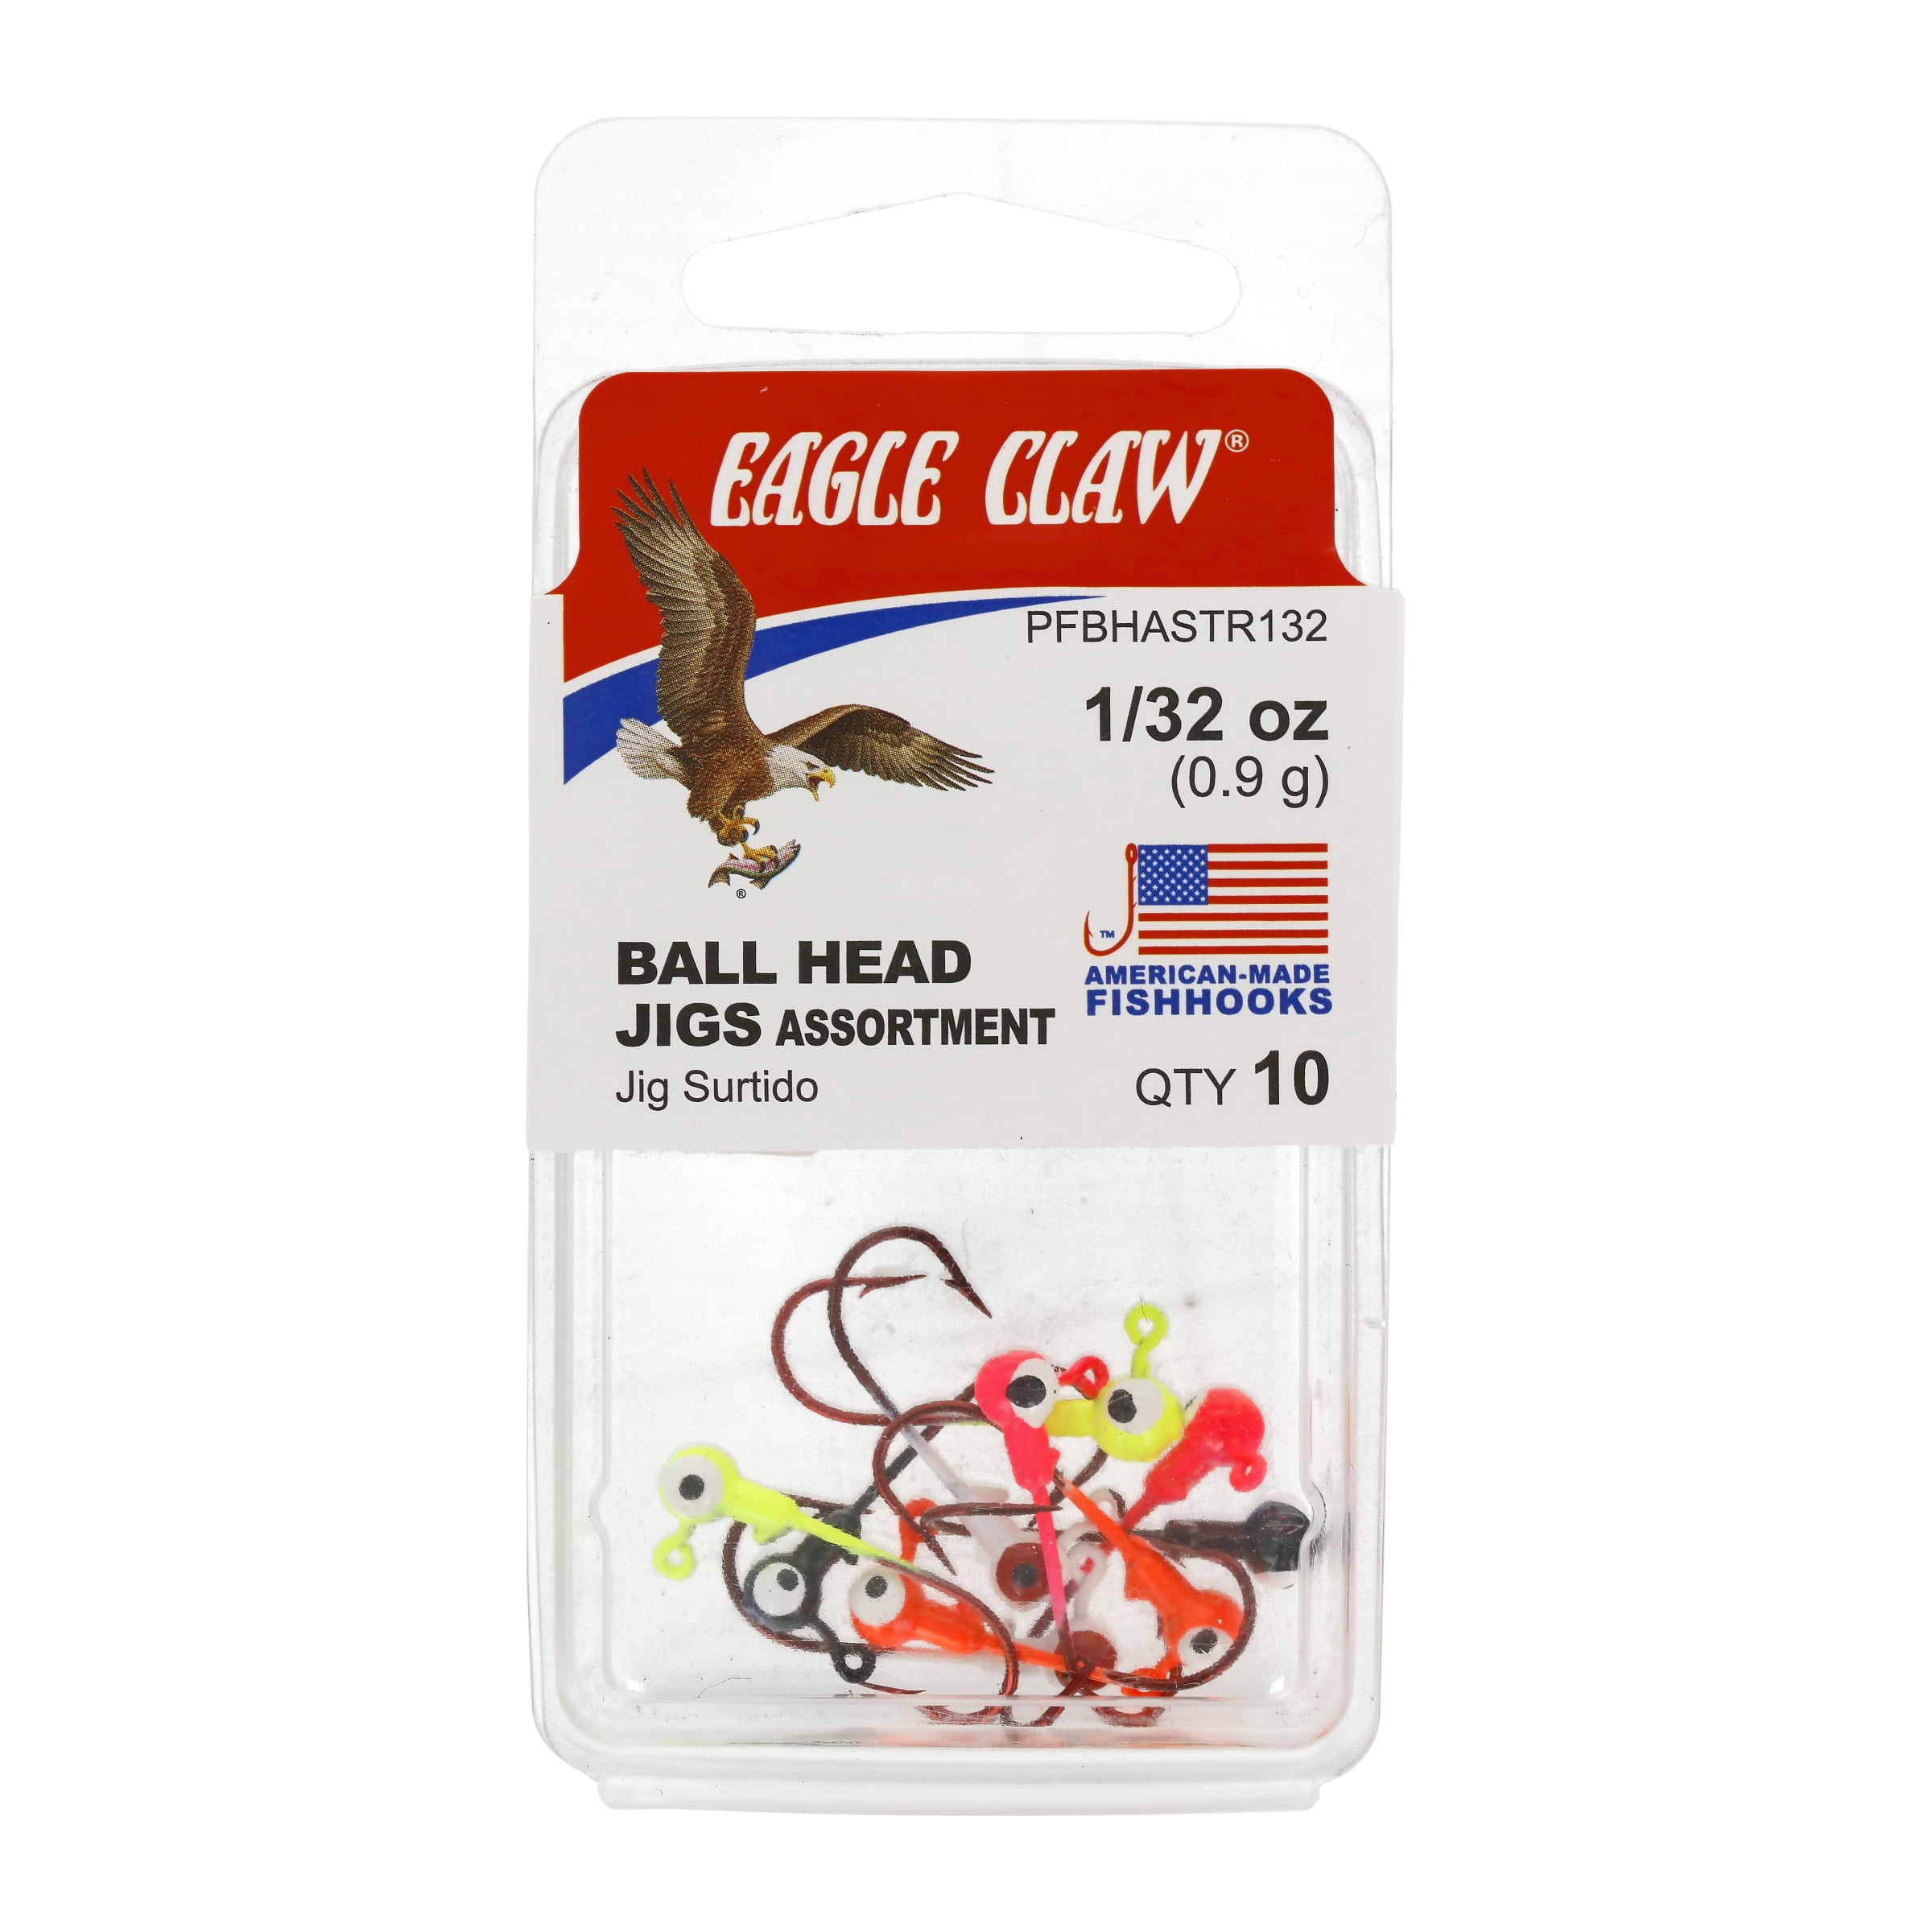 Eagle Claw Ball Head 1/16 Oz, Asst, Red Hook 